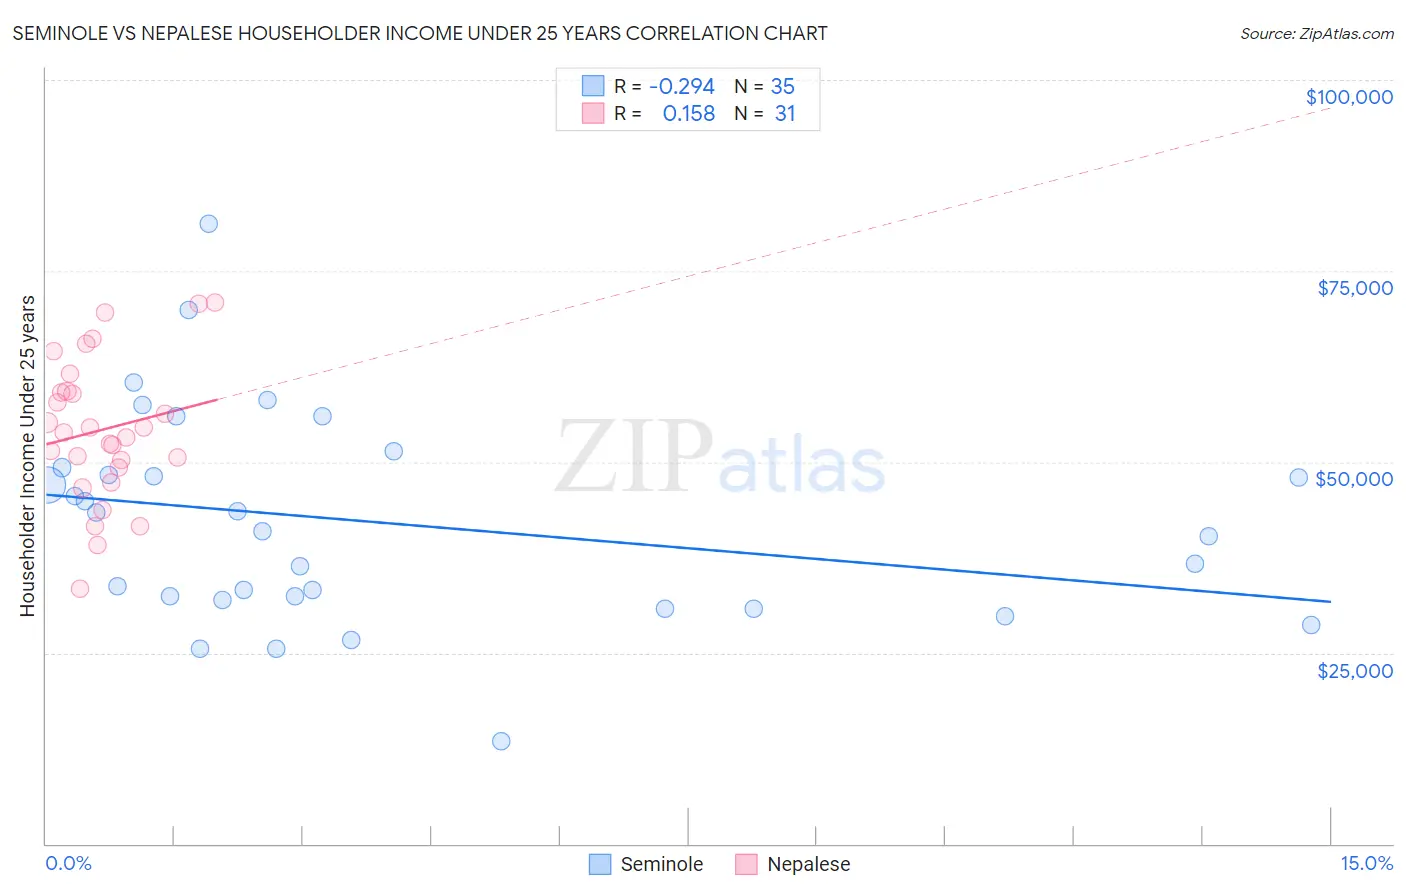 Seminole vs Nepalese Householder Income Under 25 years